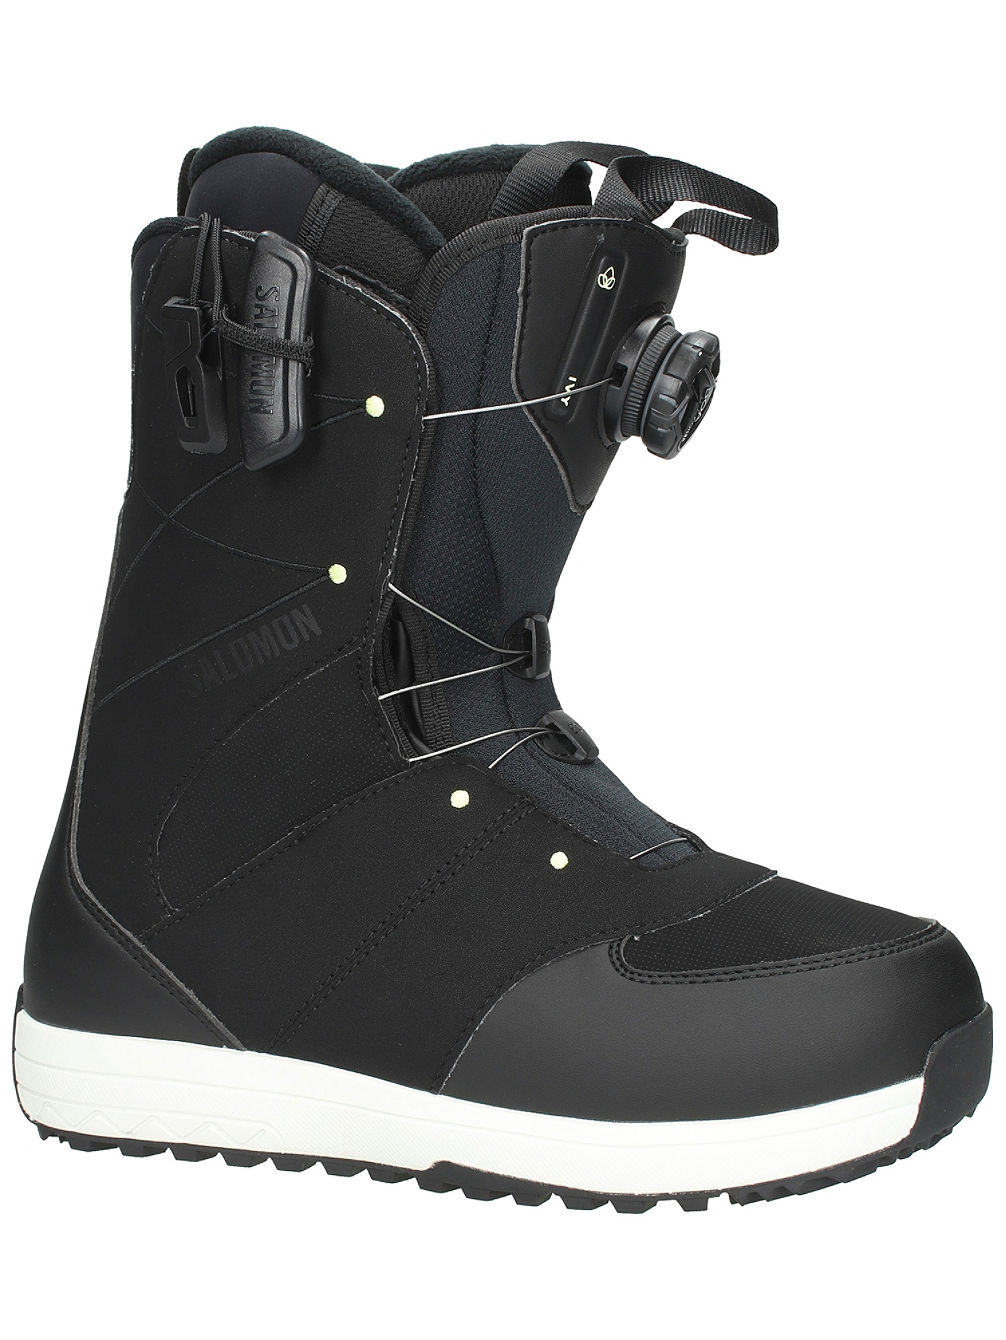 Ivy Boa SJ Snowboard Boots